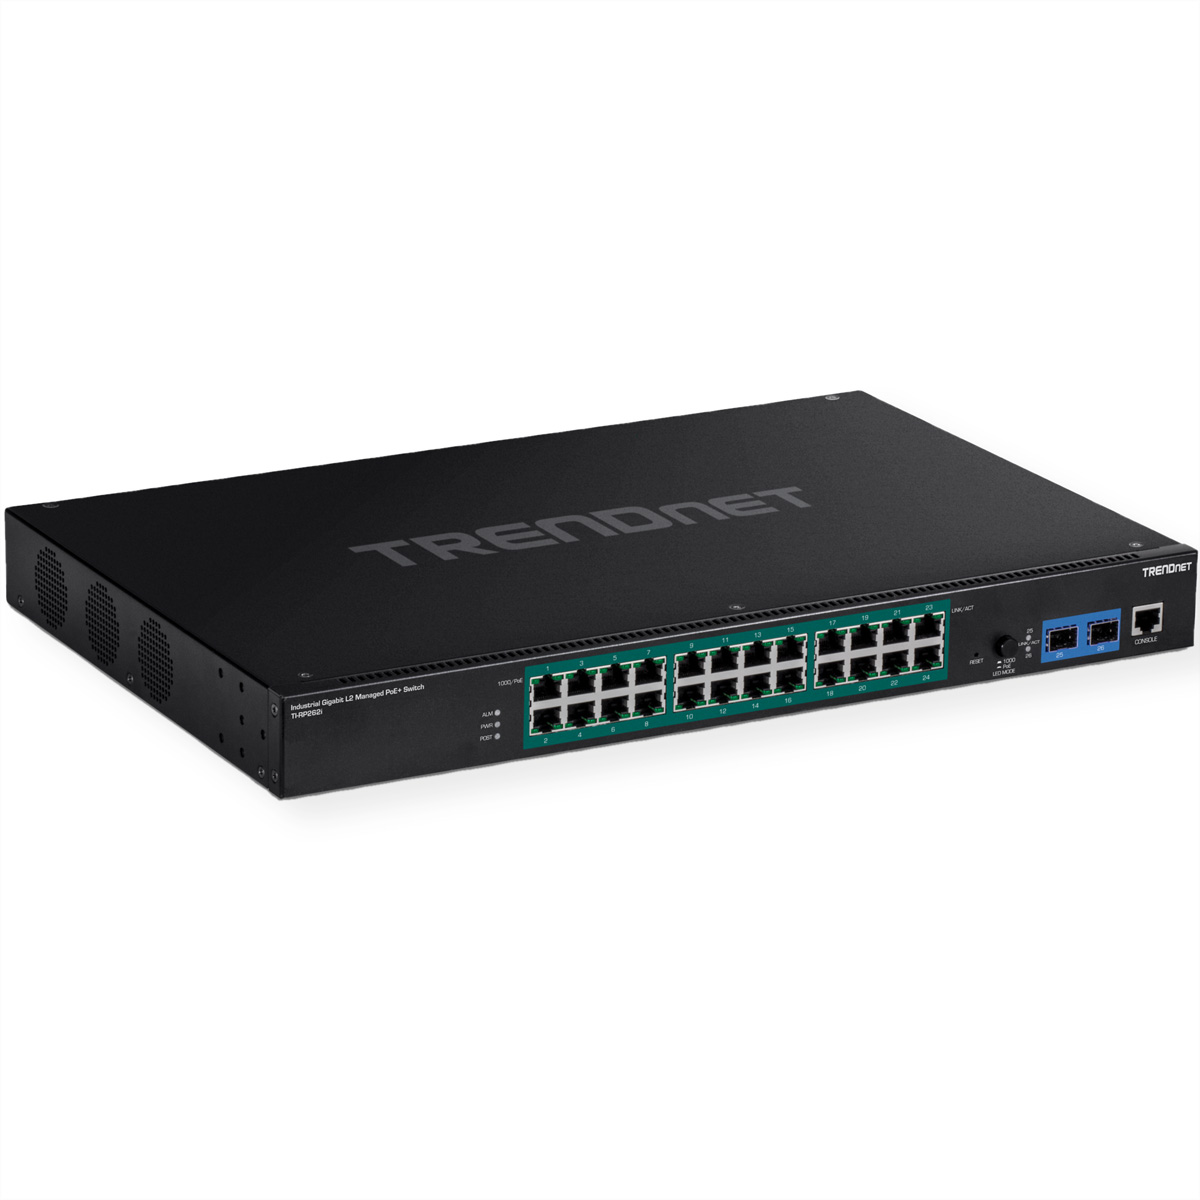 TRENDnet TI-RP262i 26-Port Industrial Rackmount PoE+ Switch Gigabit L2 Managed